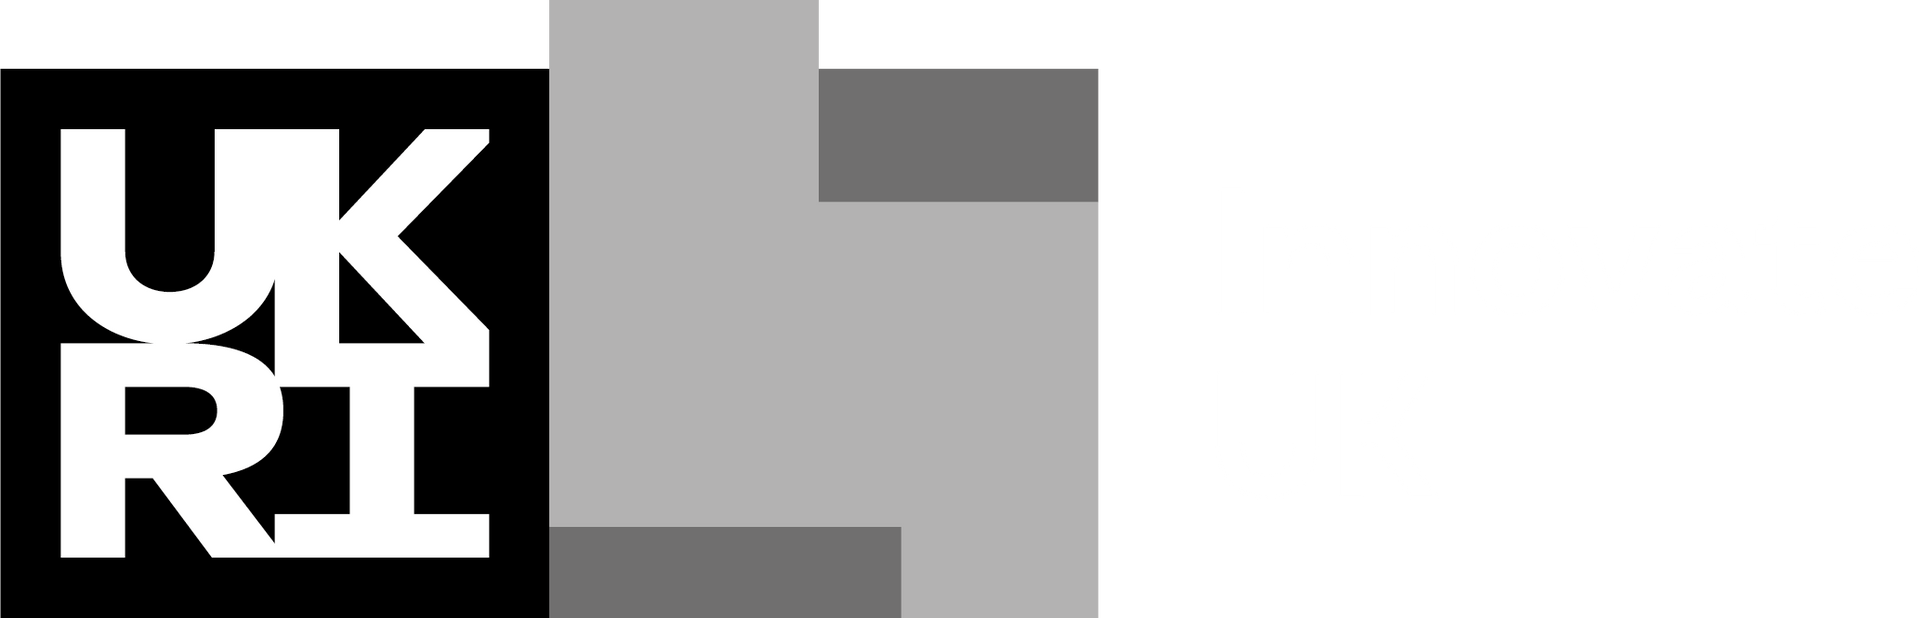 UKRI_IUK-Logo_Horiz-Grayscale[W](1).png